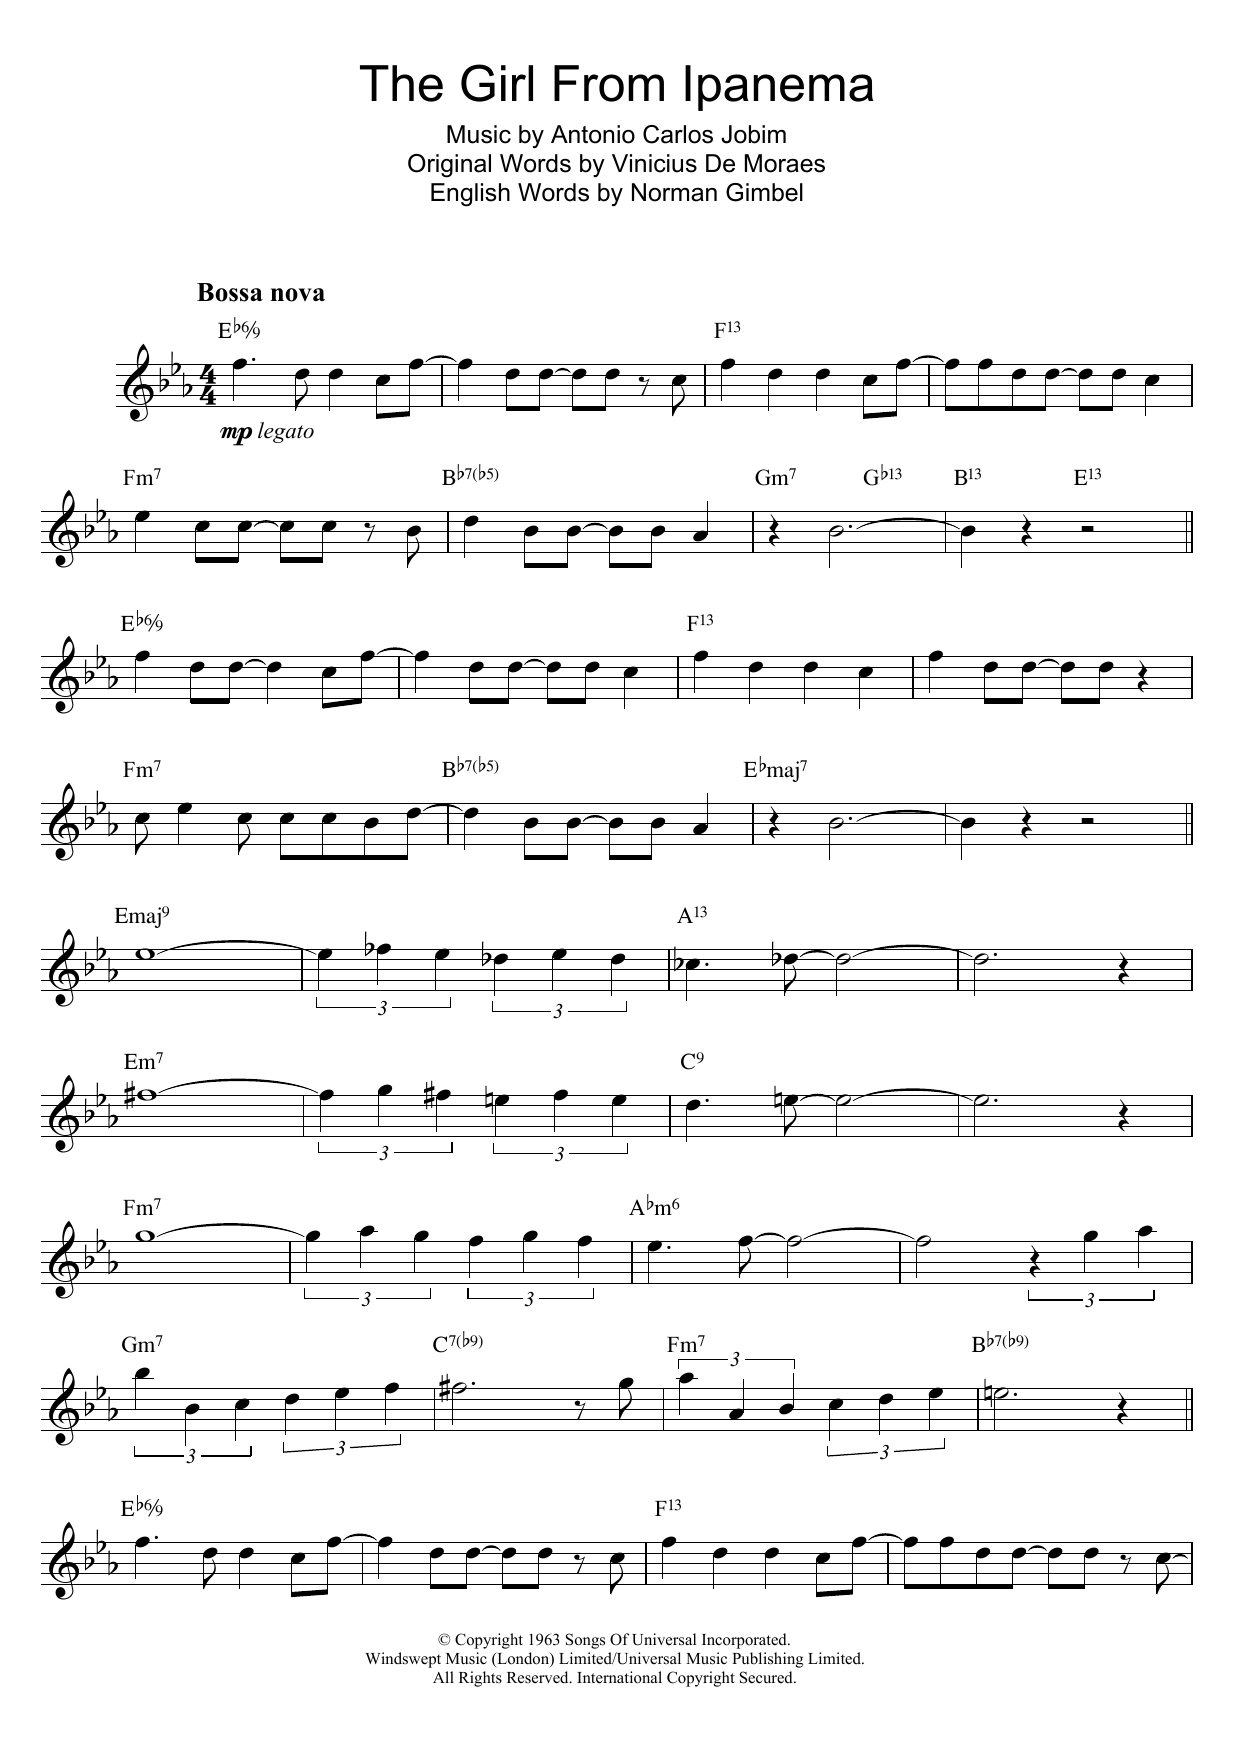 Download Antonio Carlos Jobim The Girl From Ipanema (Garota De Ipanema) Sheet Music and learn how to play Flute PDF digital score in minutes